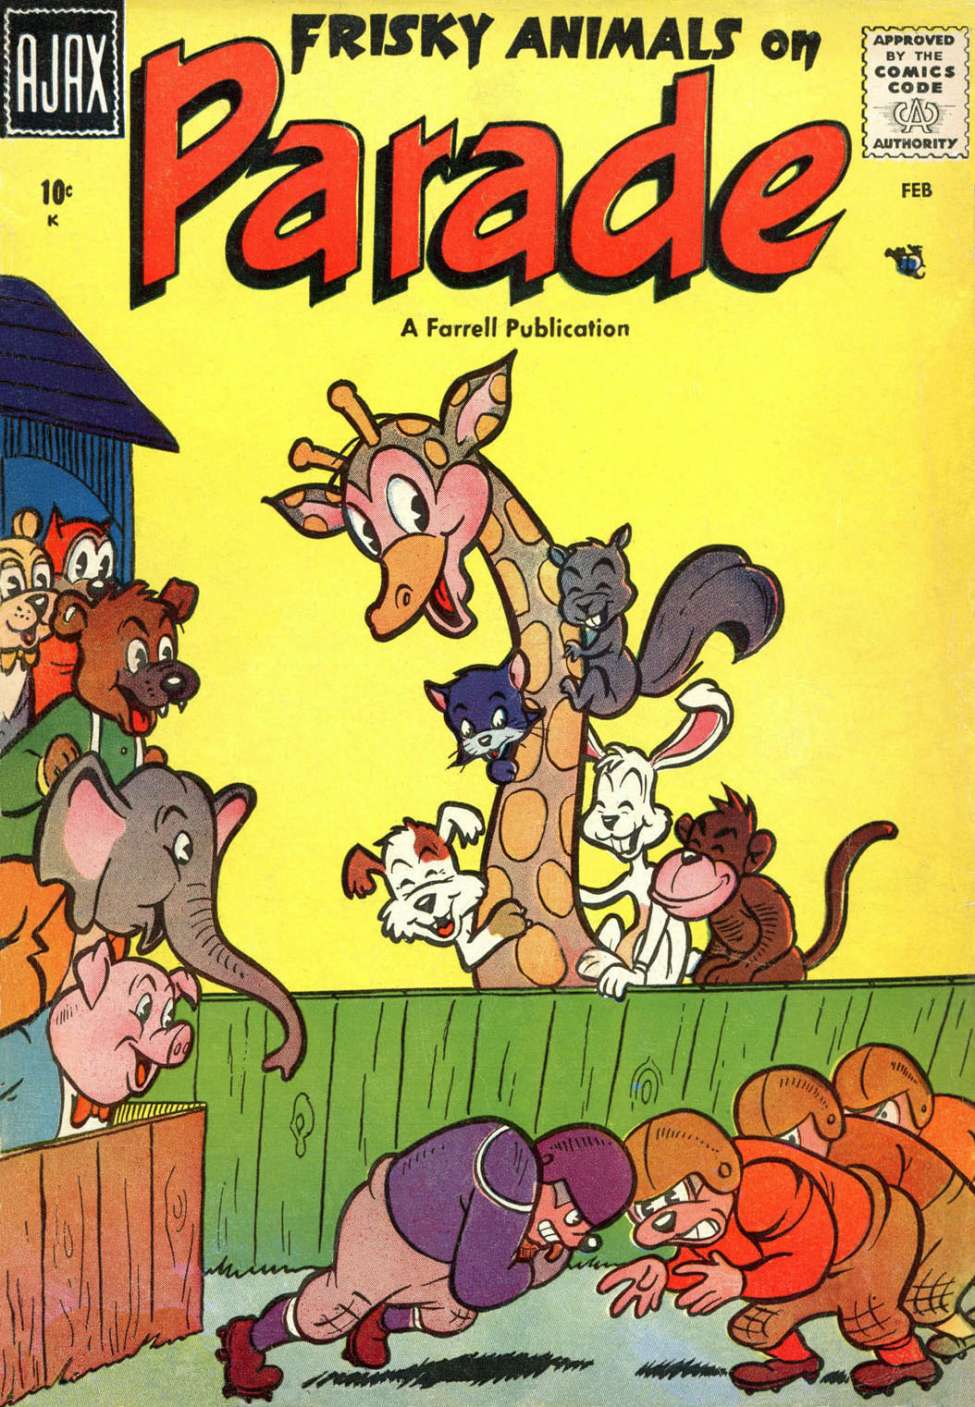 Book Cover For Frisky Animals on Parade 3